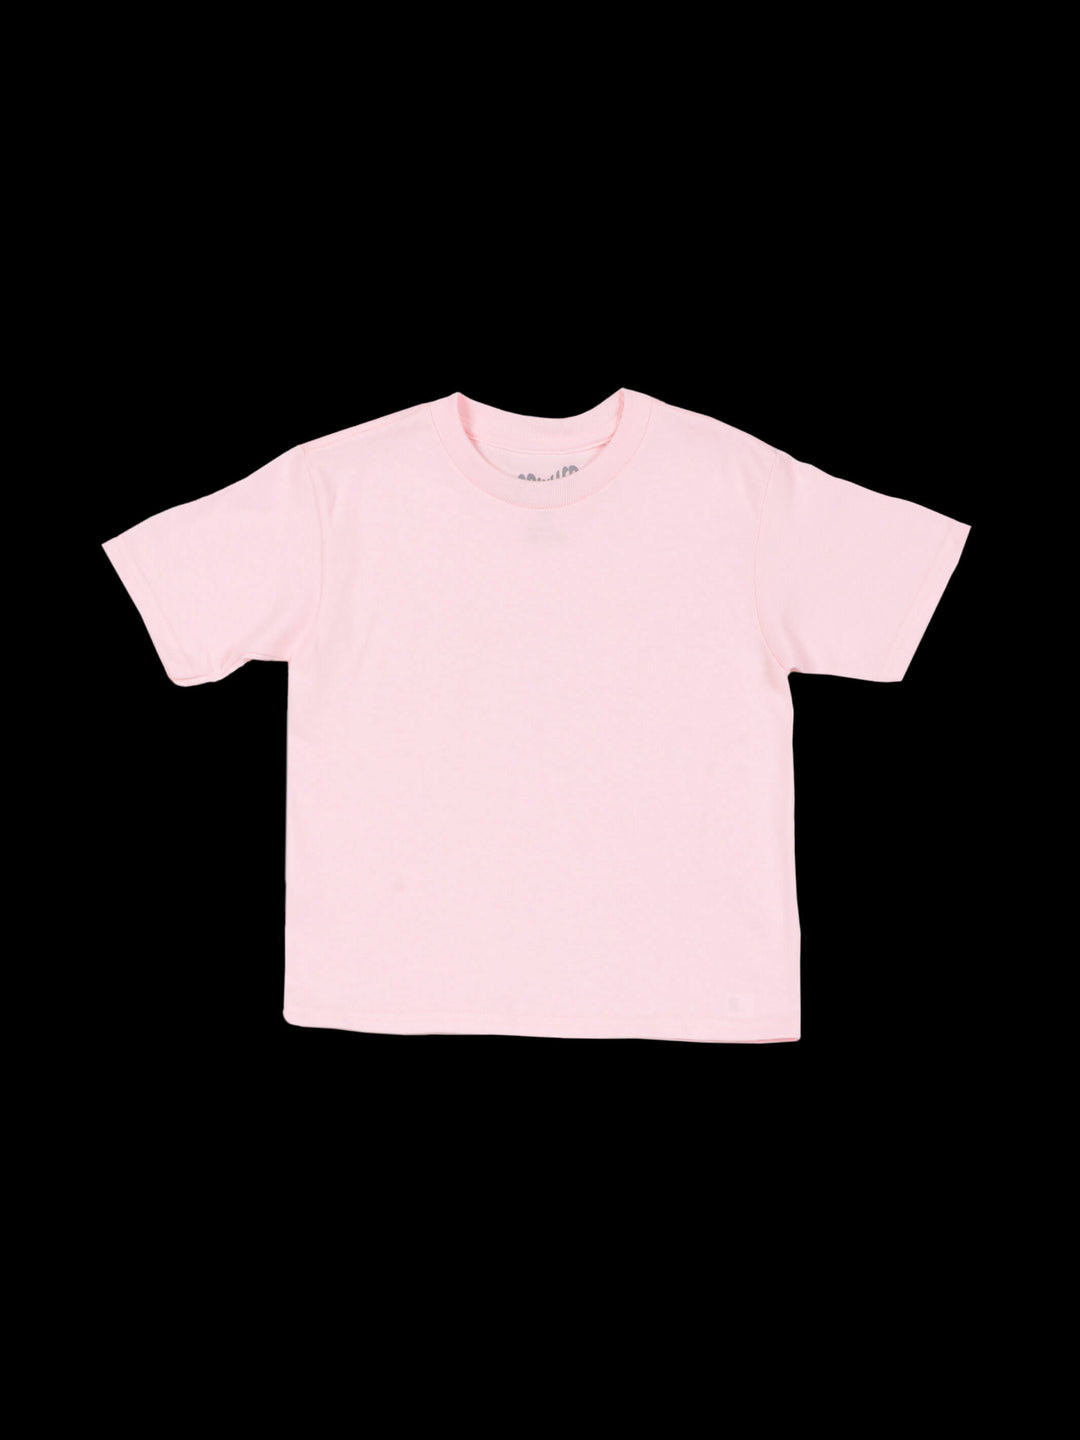 Popkiller custom printed pink kid's t-shirt.